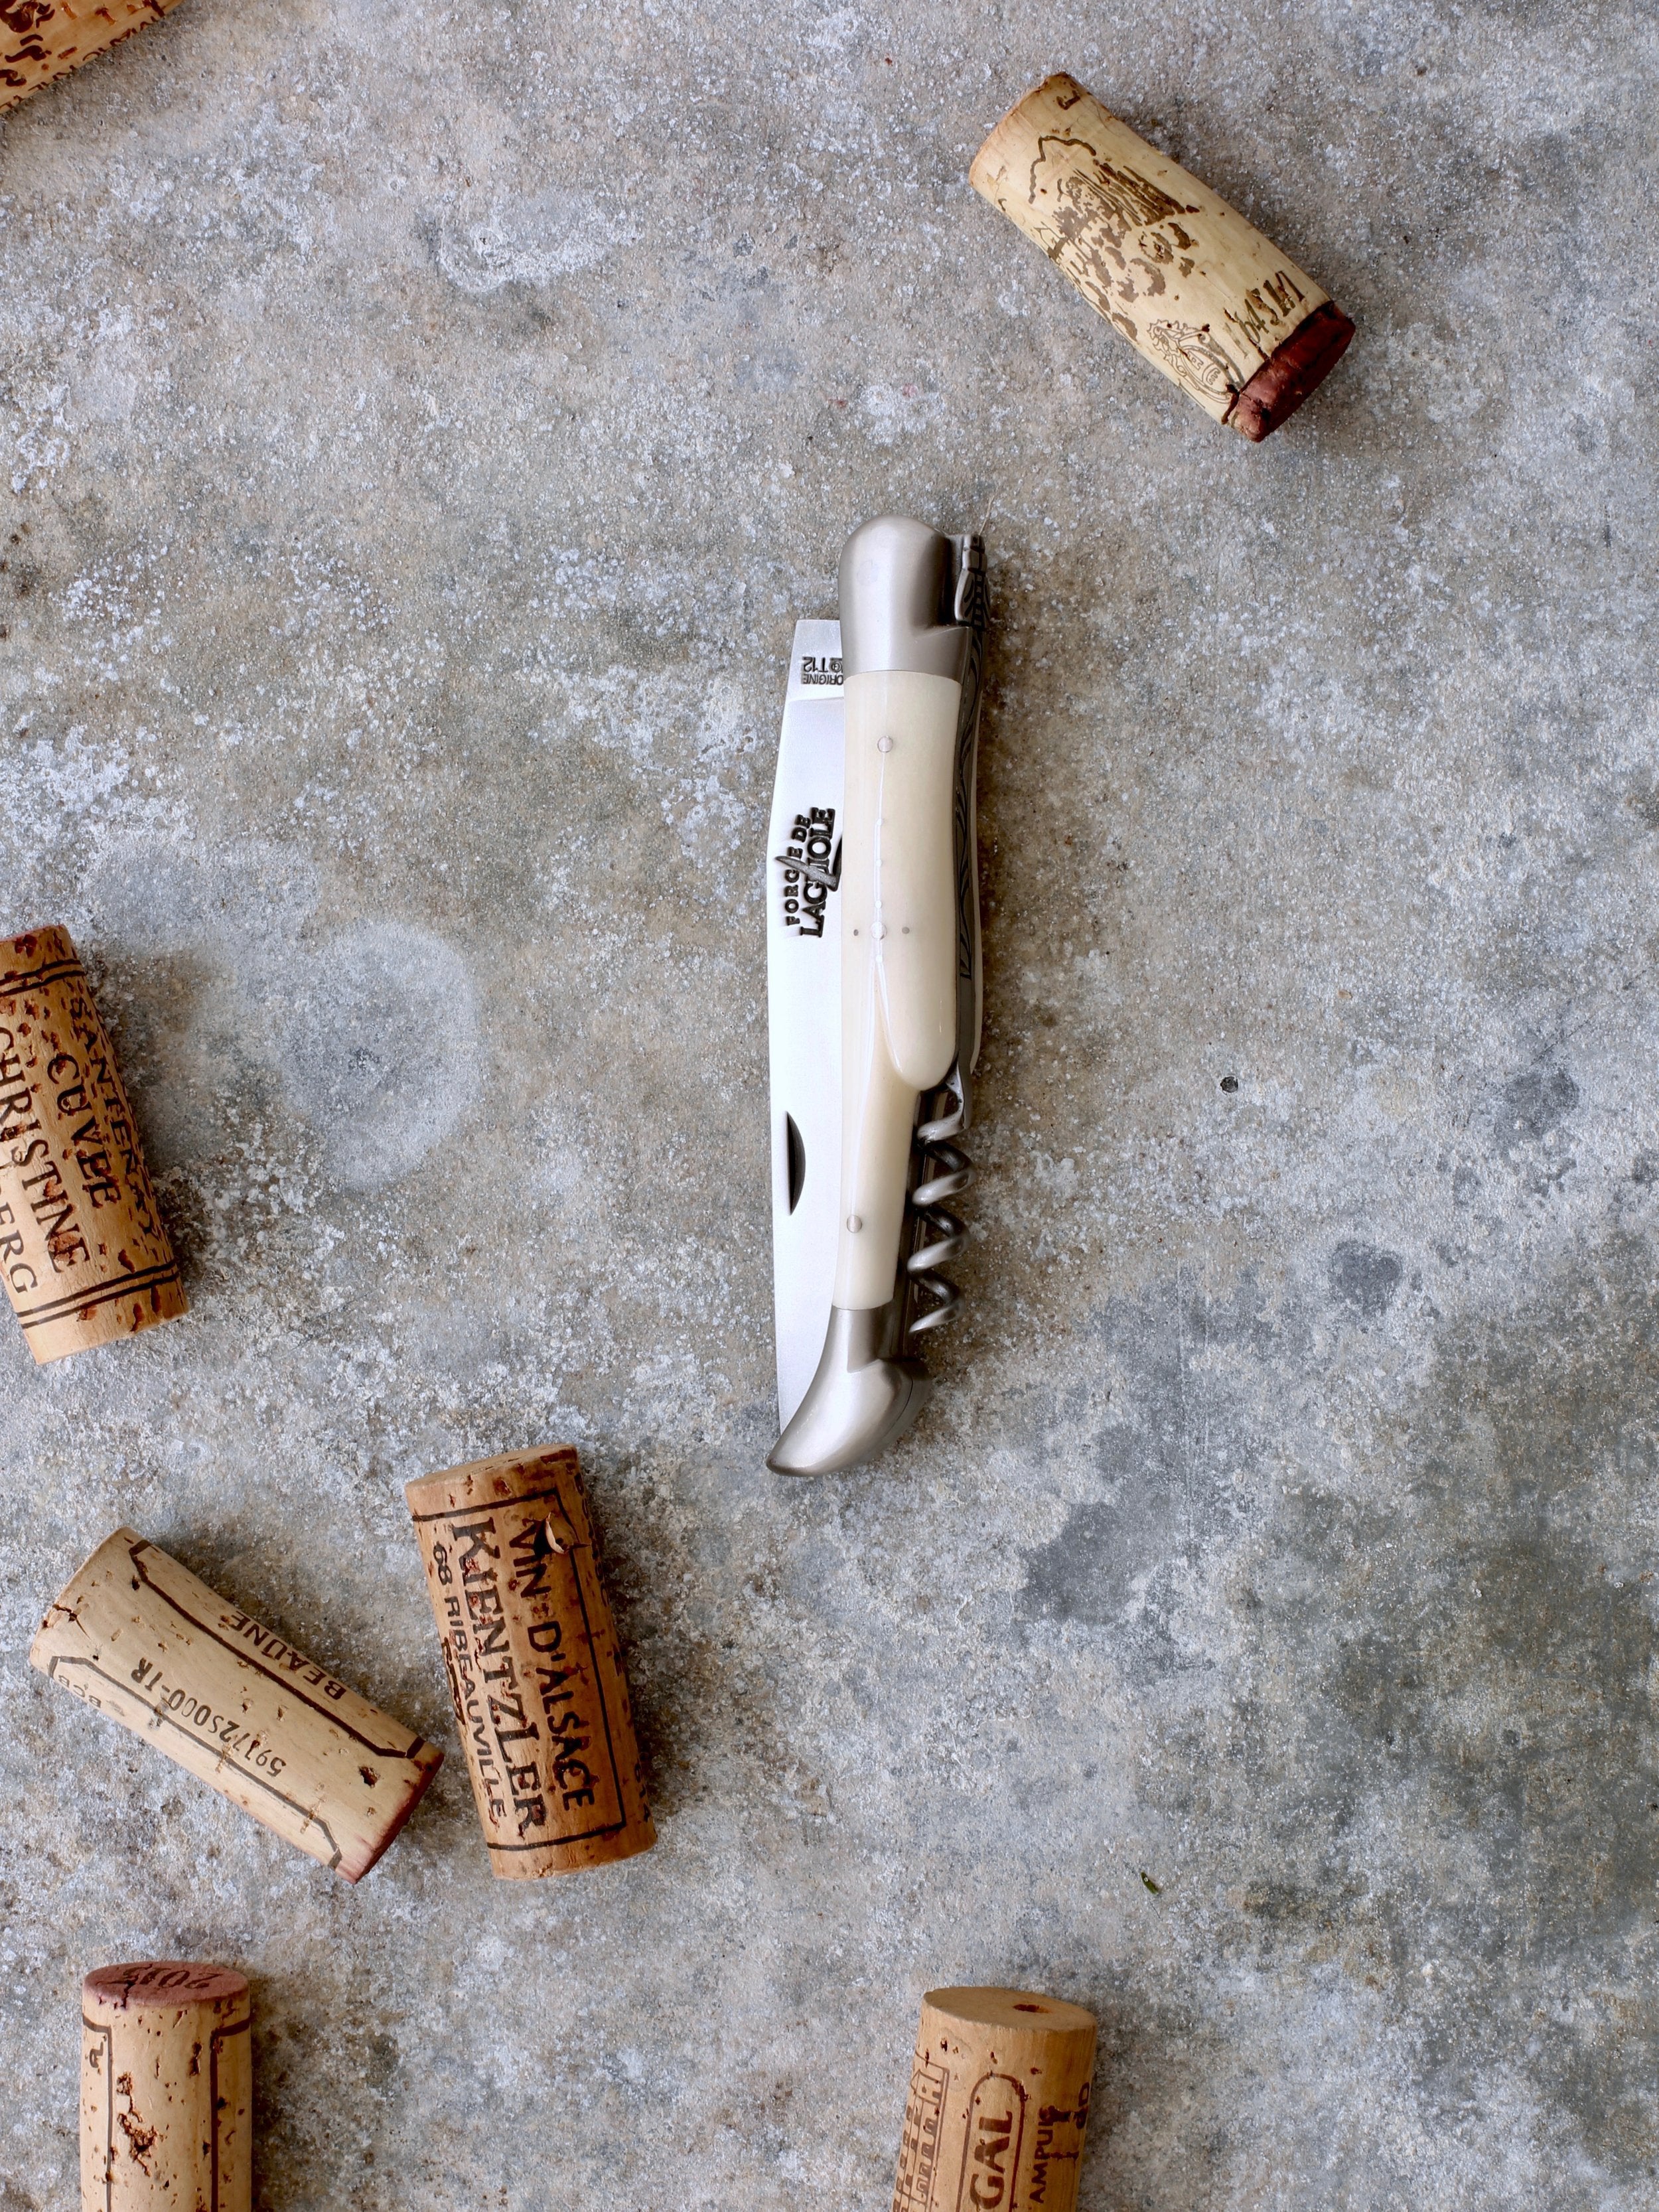 French Picnic Knife & Corkscrew